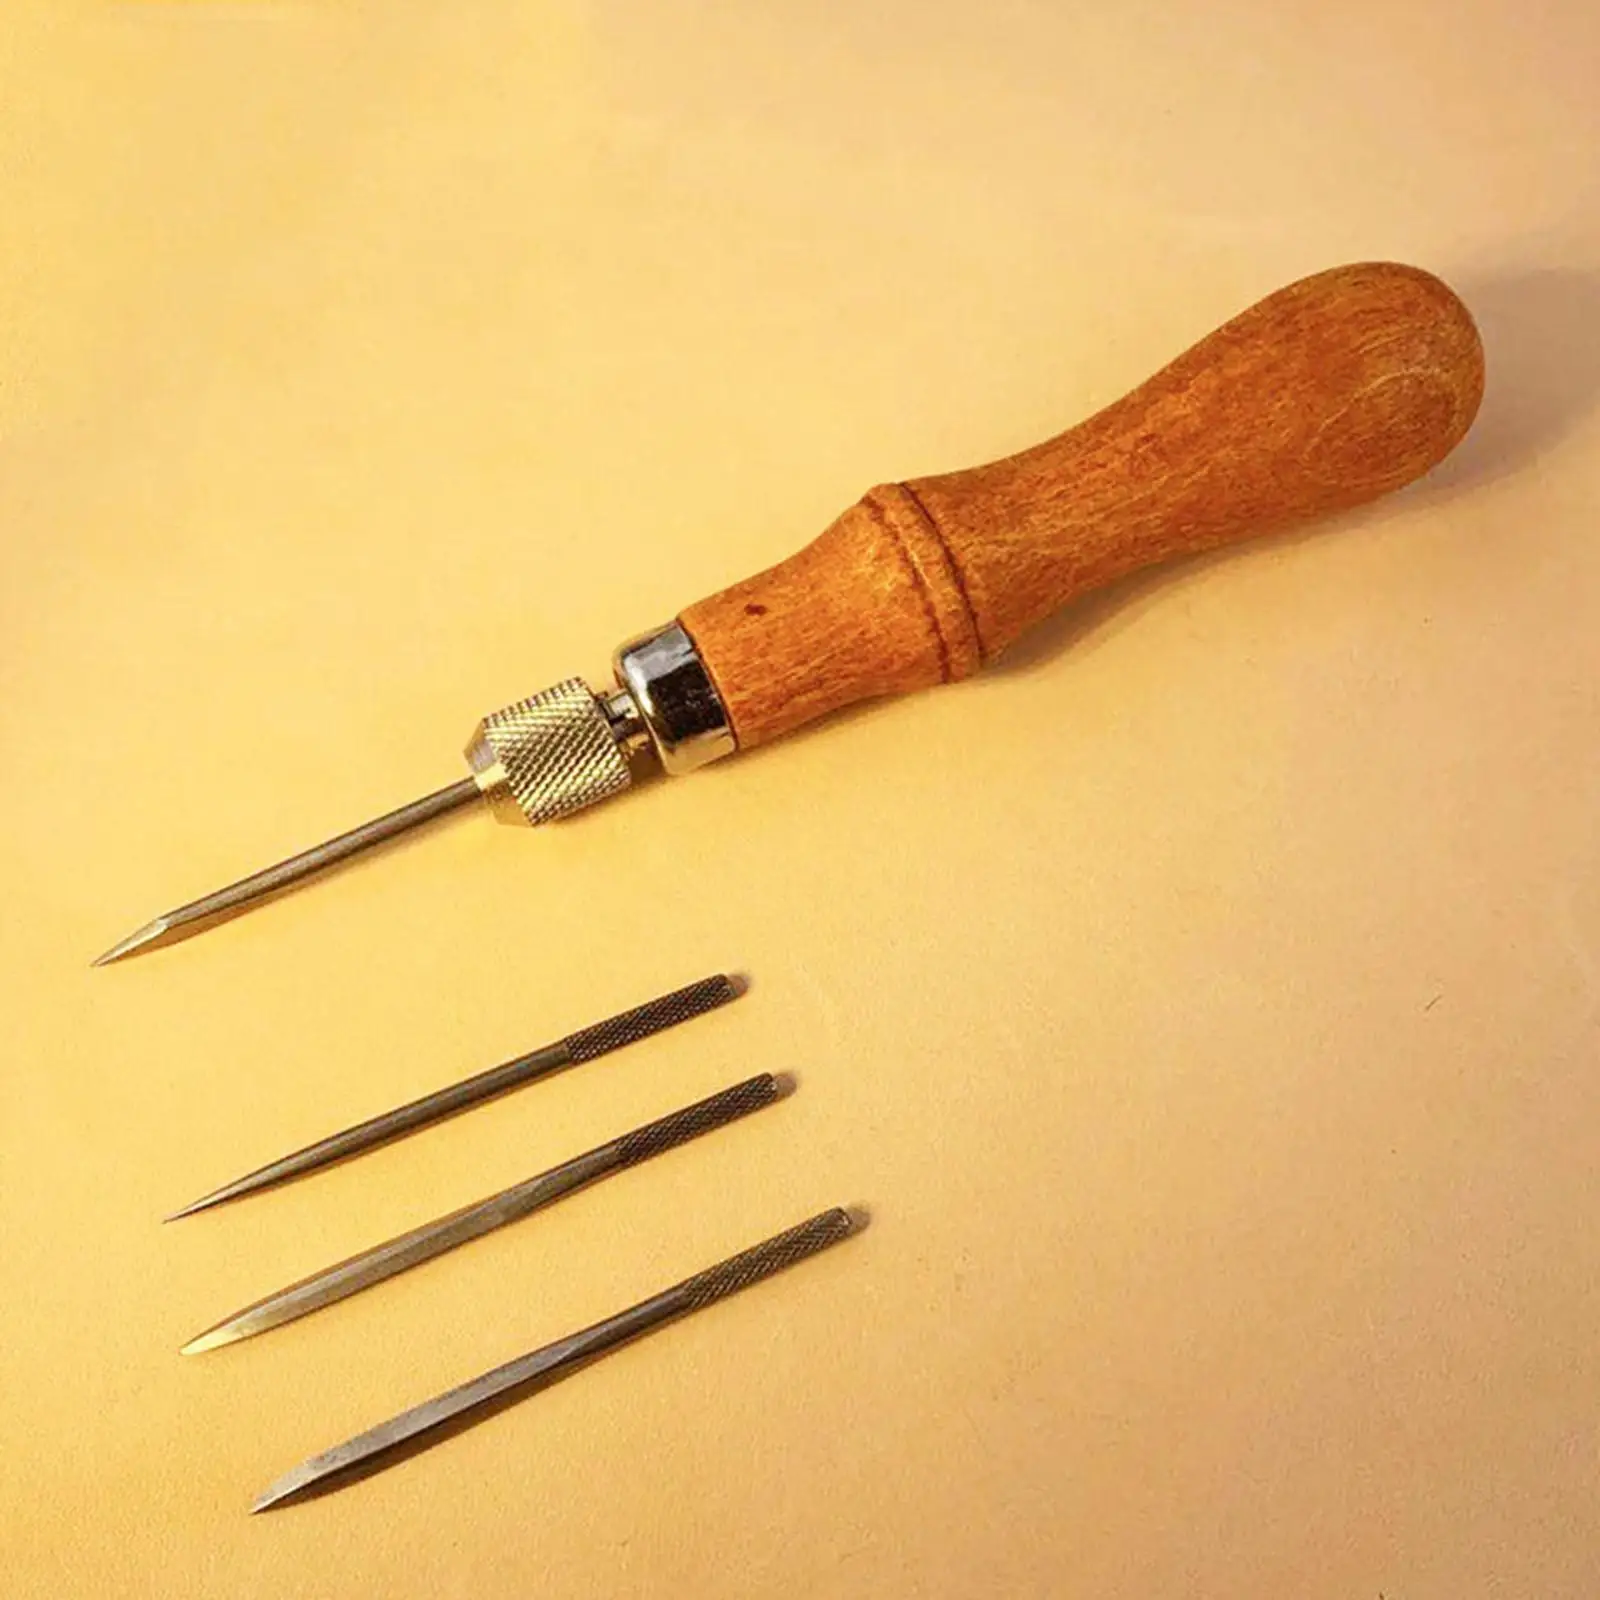 Professional Awl Tool Handmade Repairing Leathercraft Wood Handle Stitching Supplies Stitcher DIY Needle Sewing